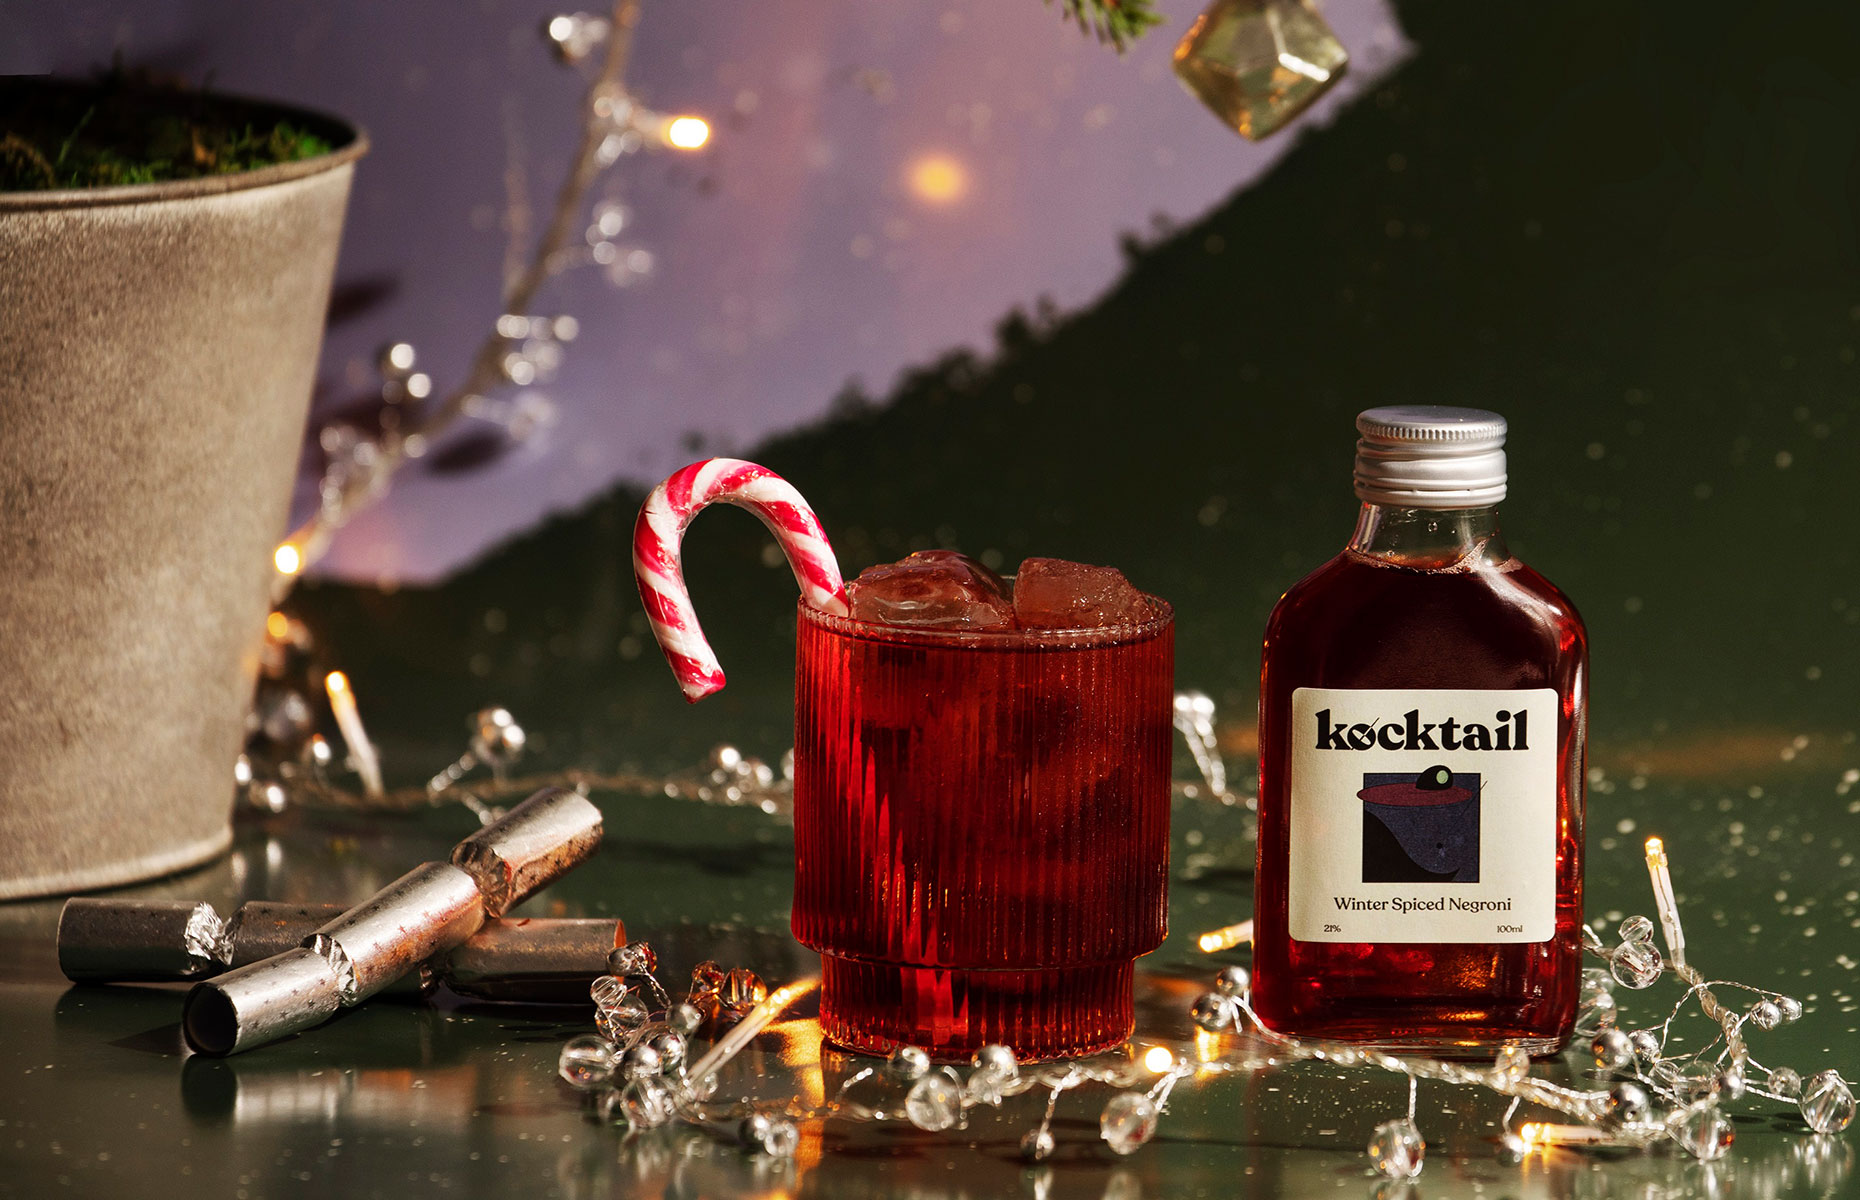 Kocktail's winter-spiced negroni (Image: Image courtesy of Kocktail)